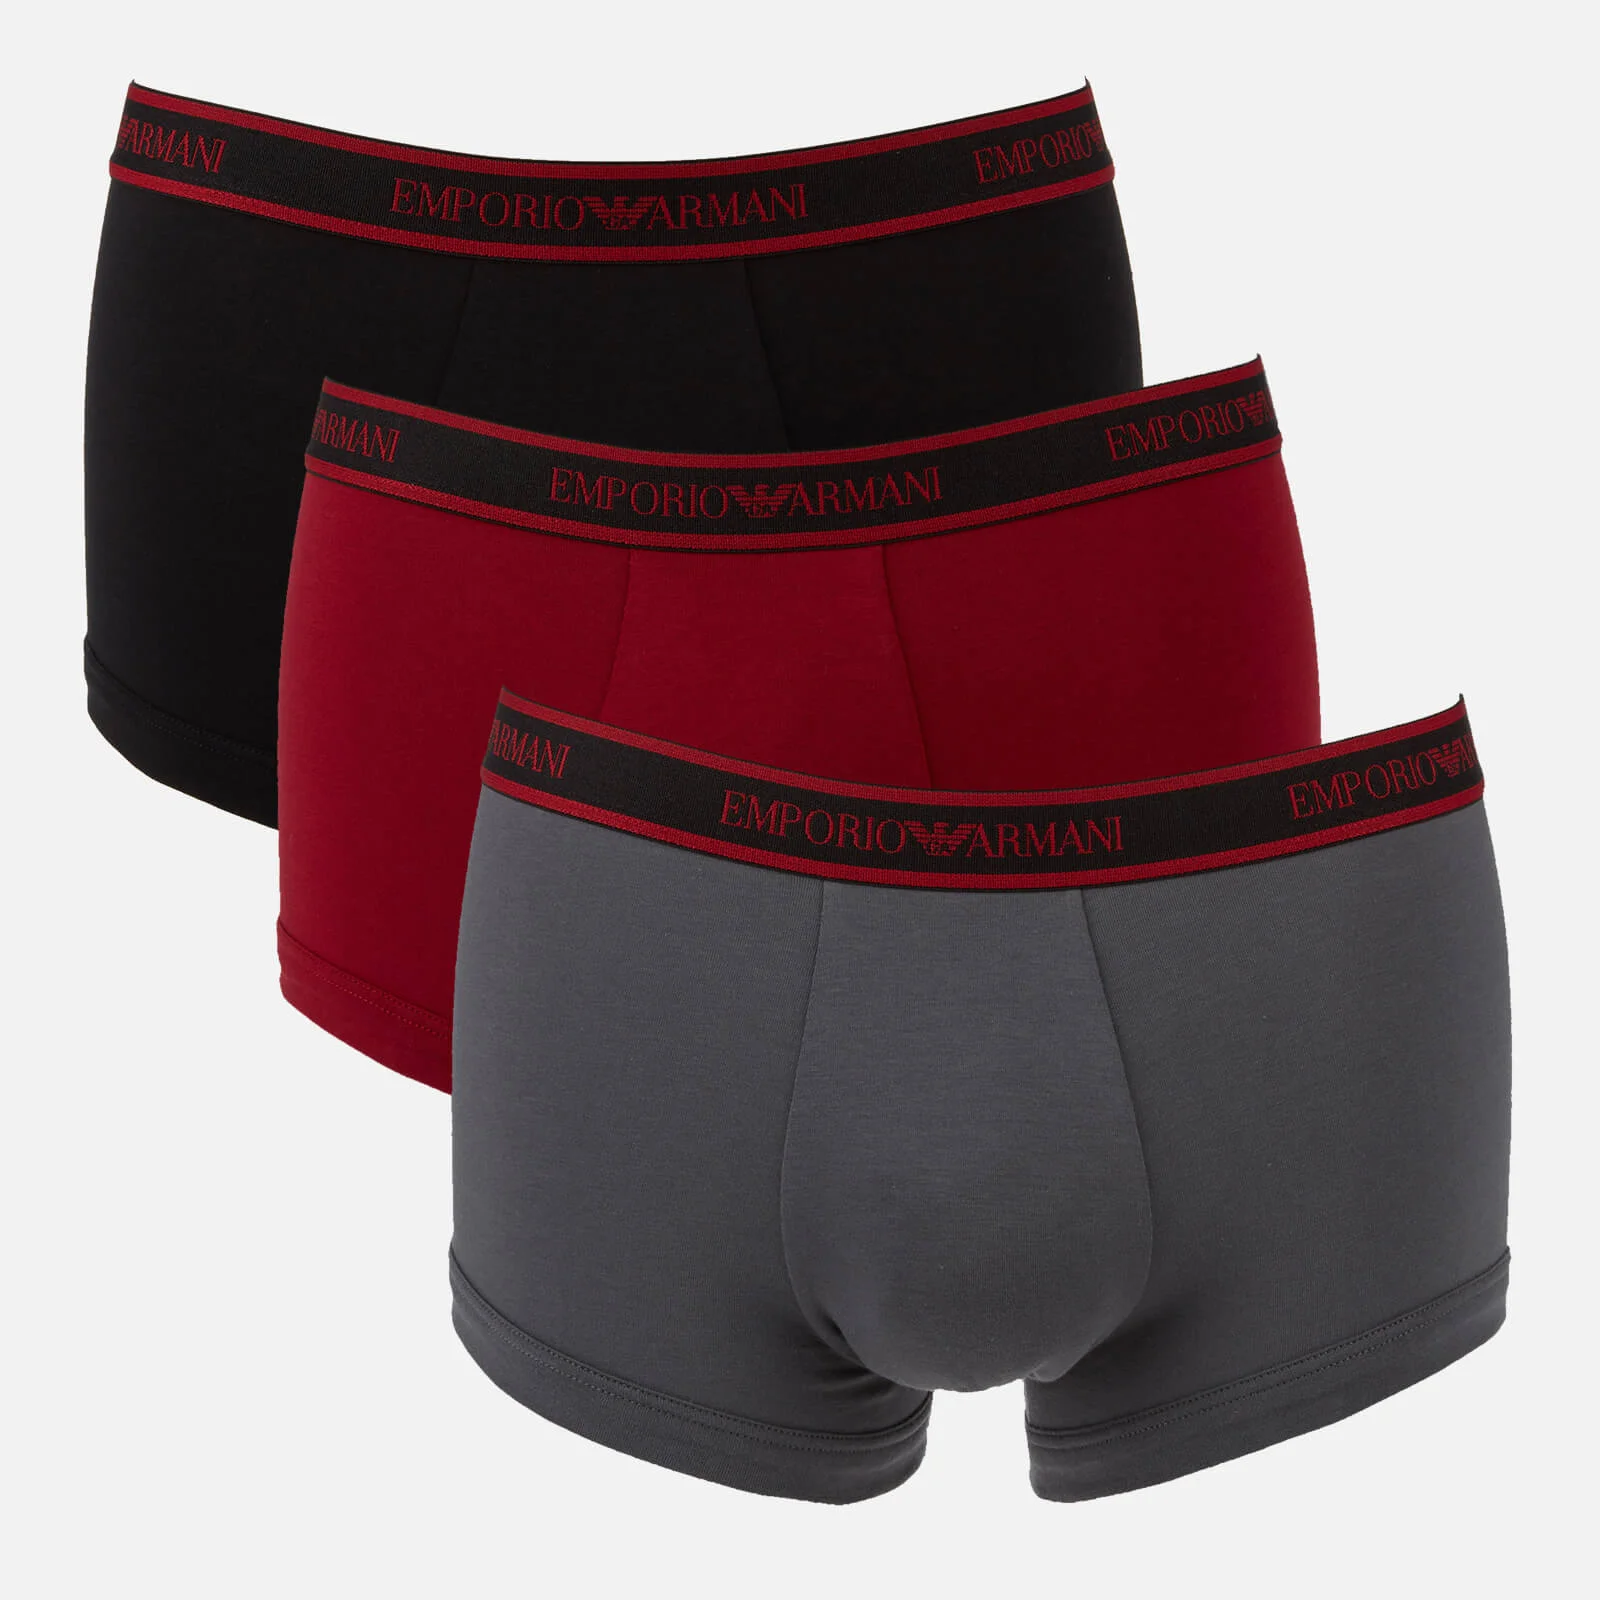 Emporio Armani Men's Logoband 3 Pack Trunk Boxer Shorts - Burgundy/Grey/Black Image 1